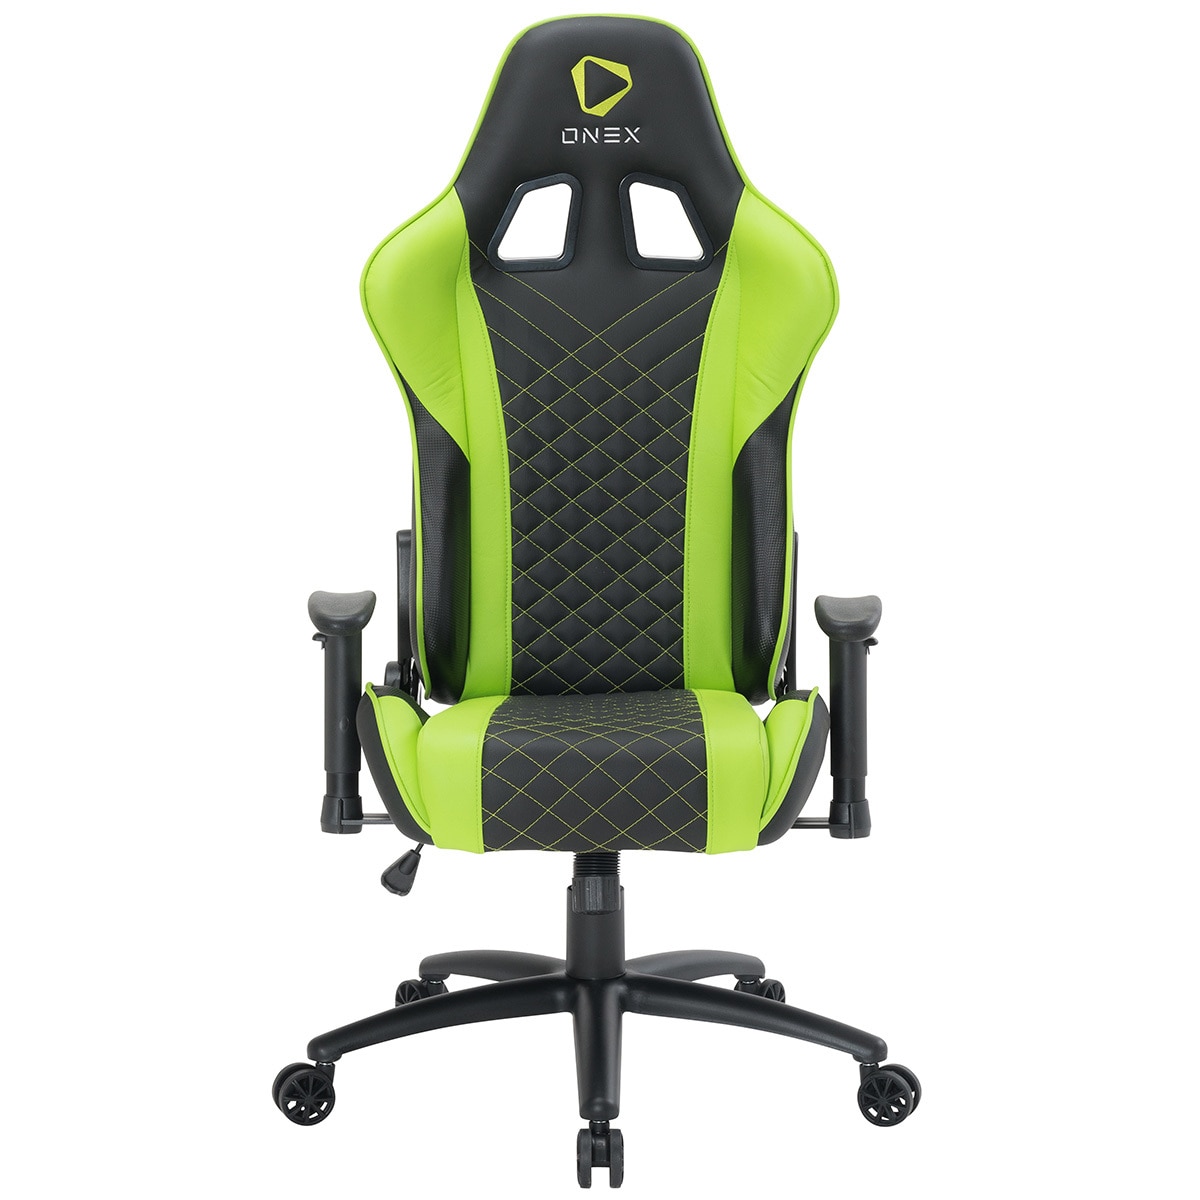 Aerocool Onex GX3 Series Gaming Chair - Black/Green